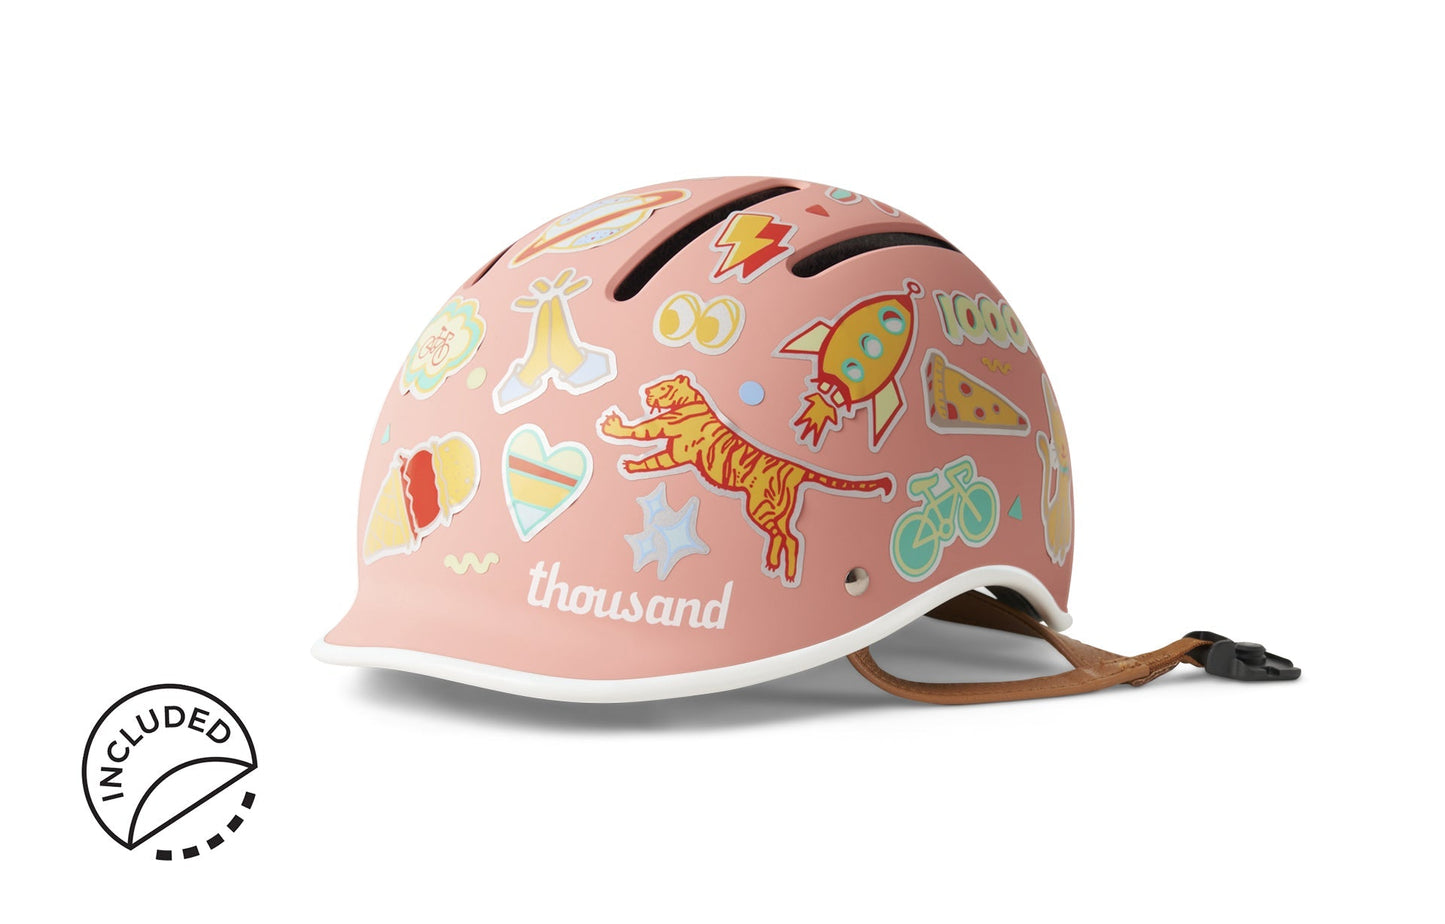 Thousand Jr. Kids Helmet by Thousand